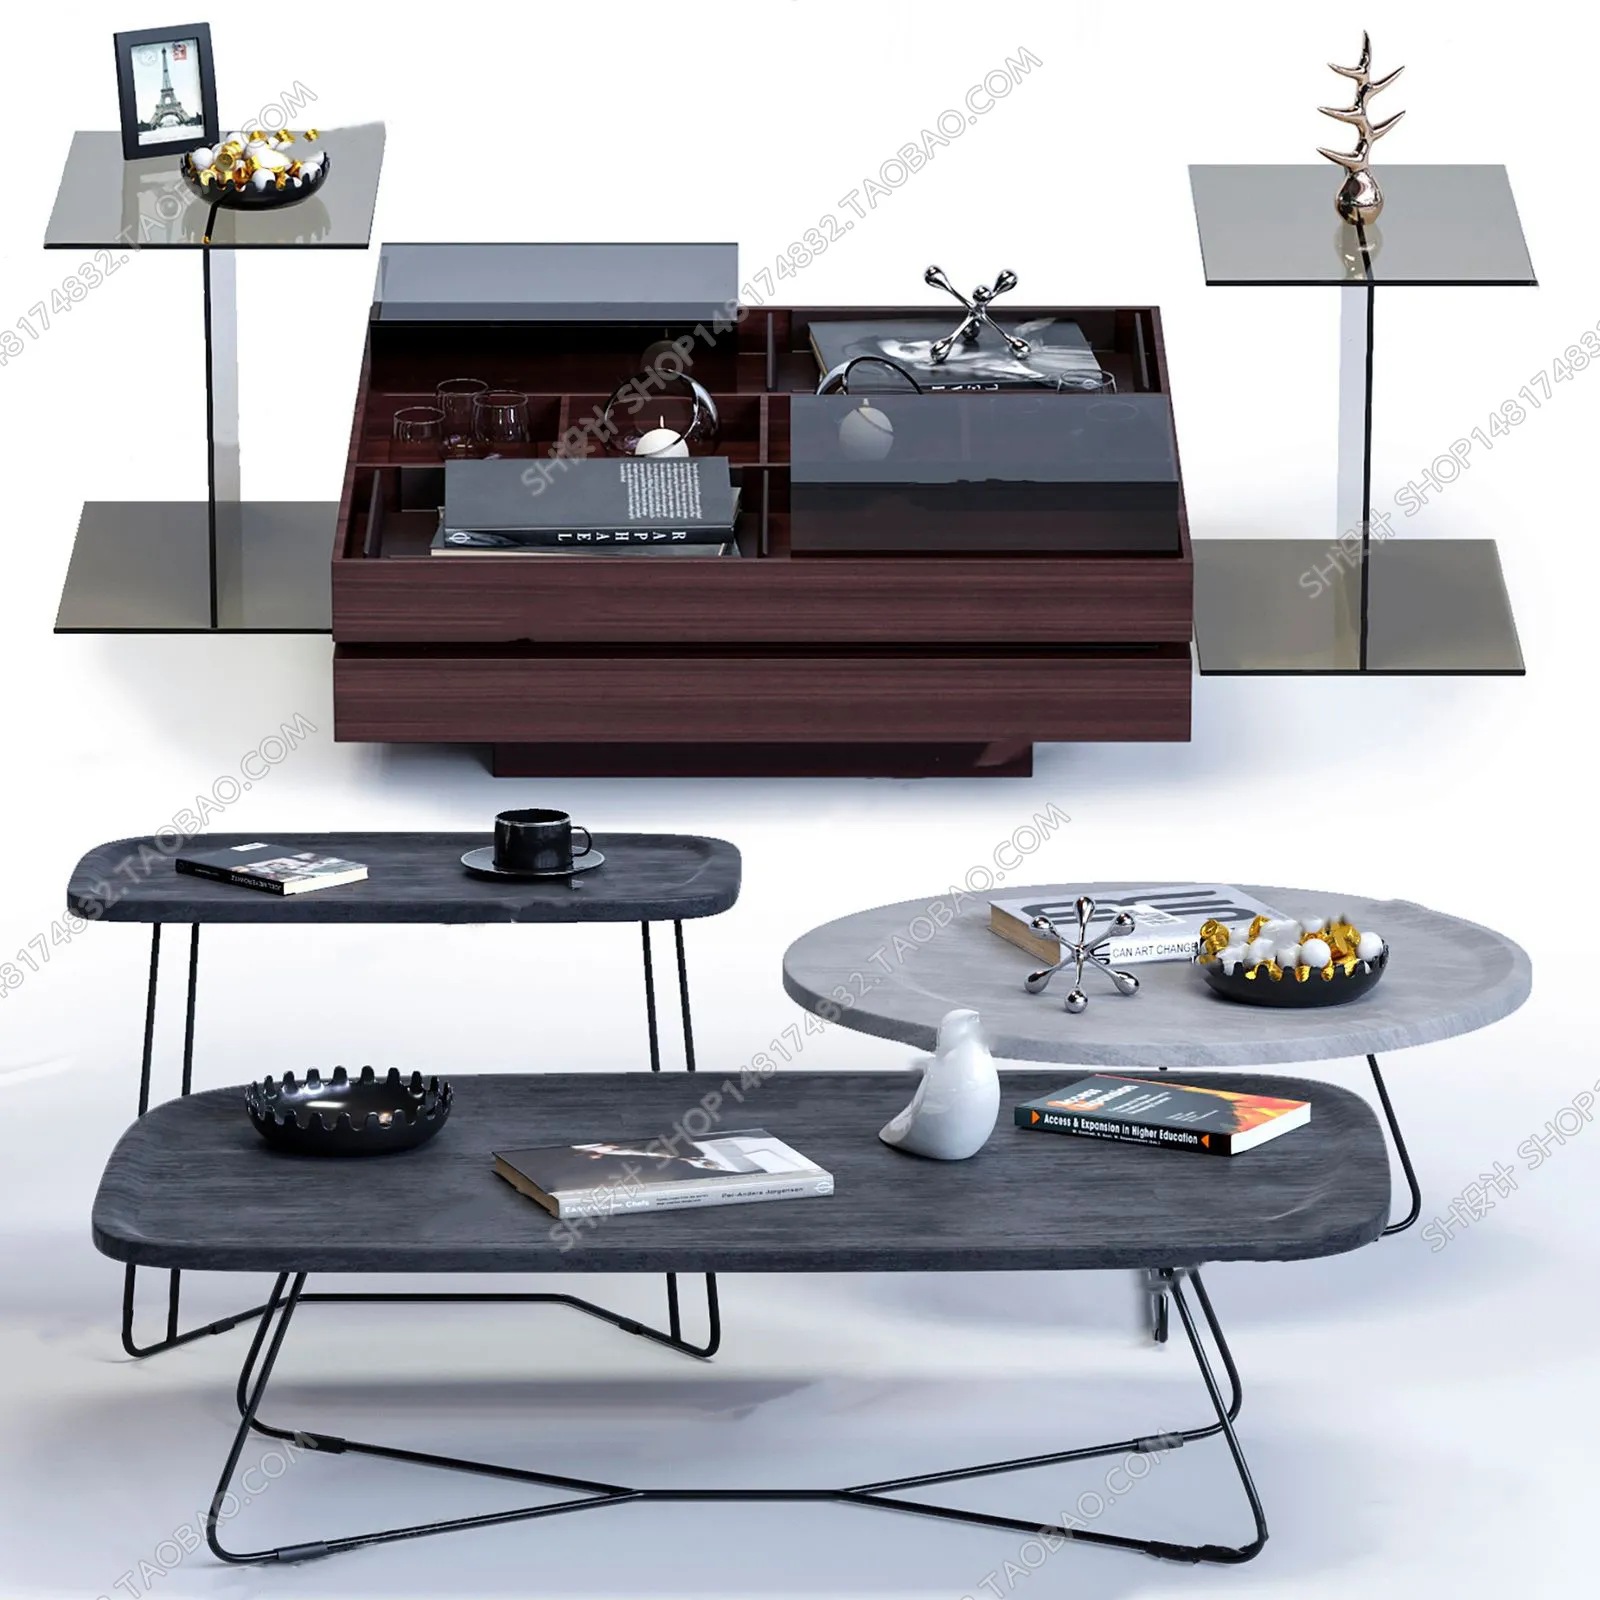 3DSKY MODELS – COFFEE TABLE 3D MODELS – 003